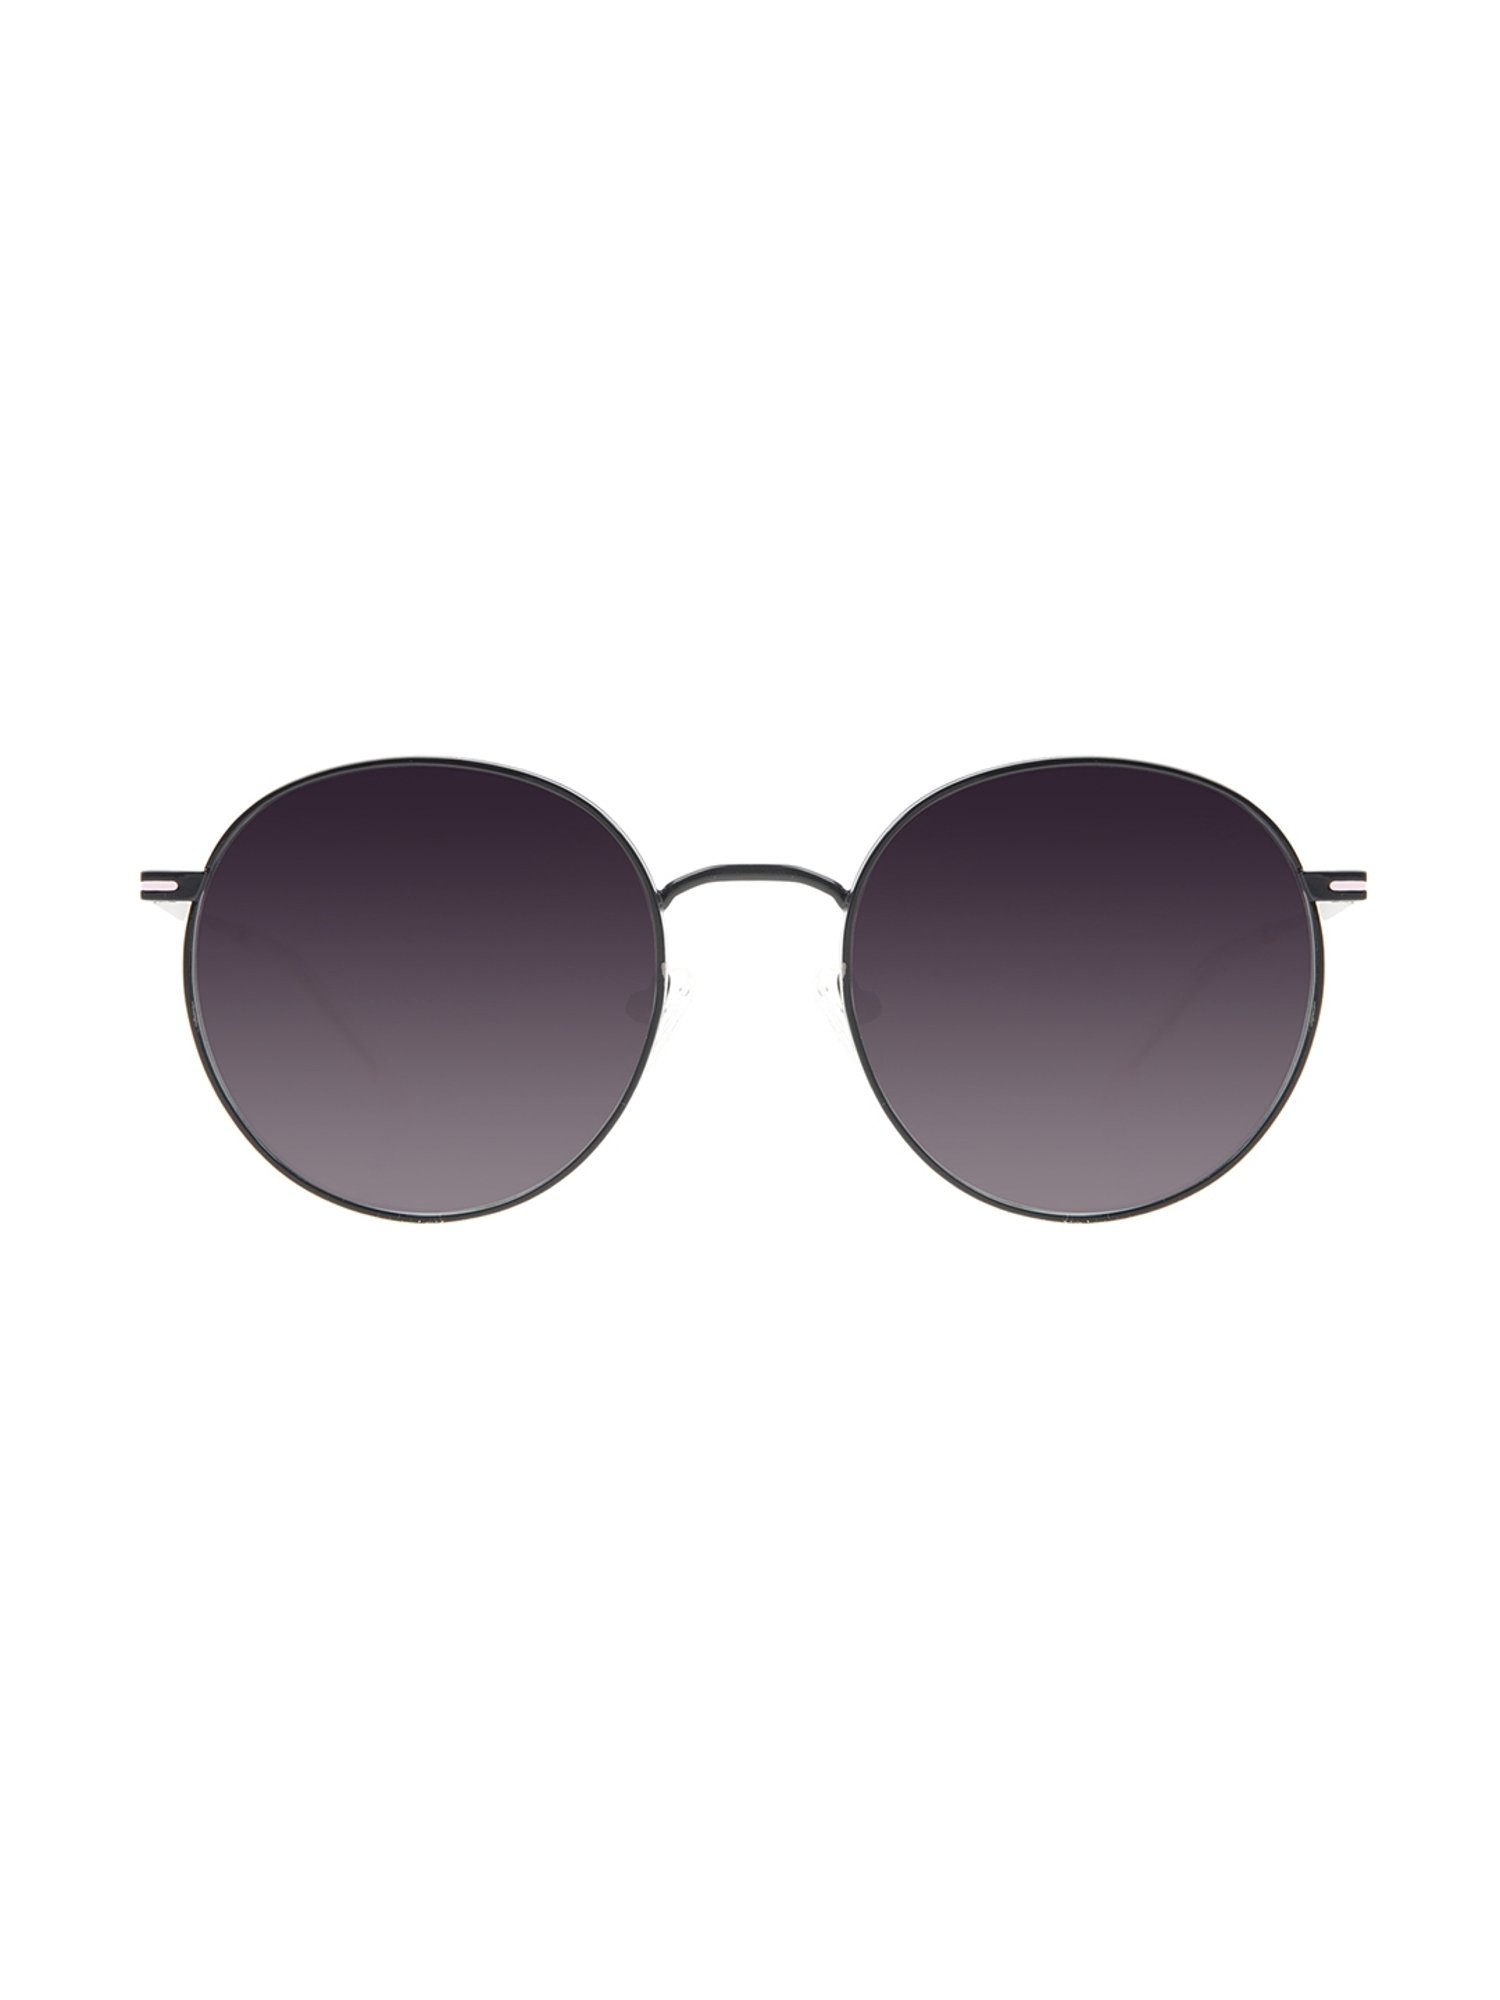 Buy ARZONAI Round Metal Unisex Sunglasses Black Frame, Black Lens (Medium)  Pack of 1 at Amazon.in